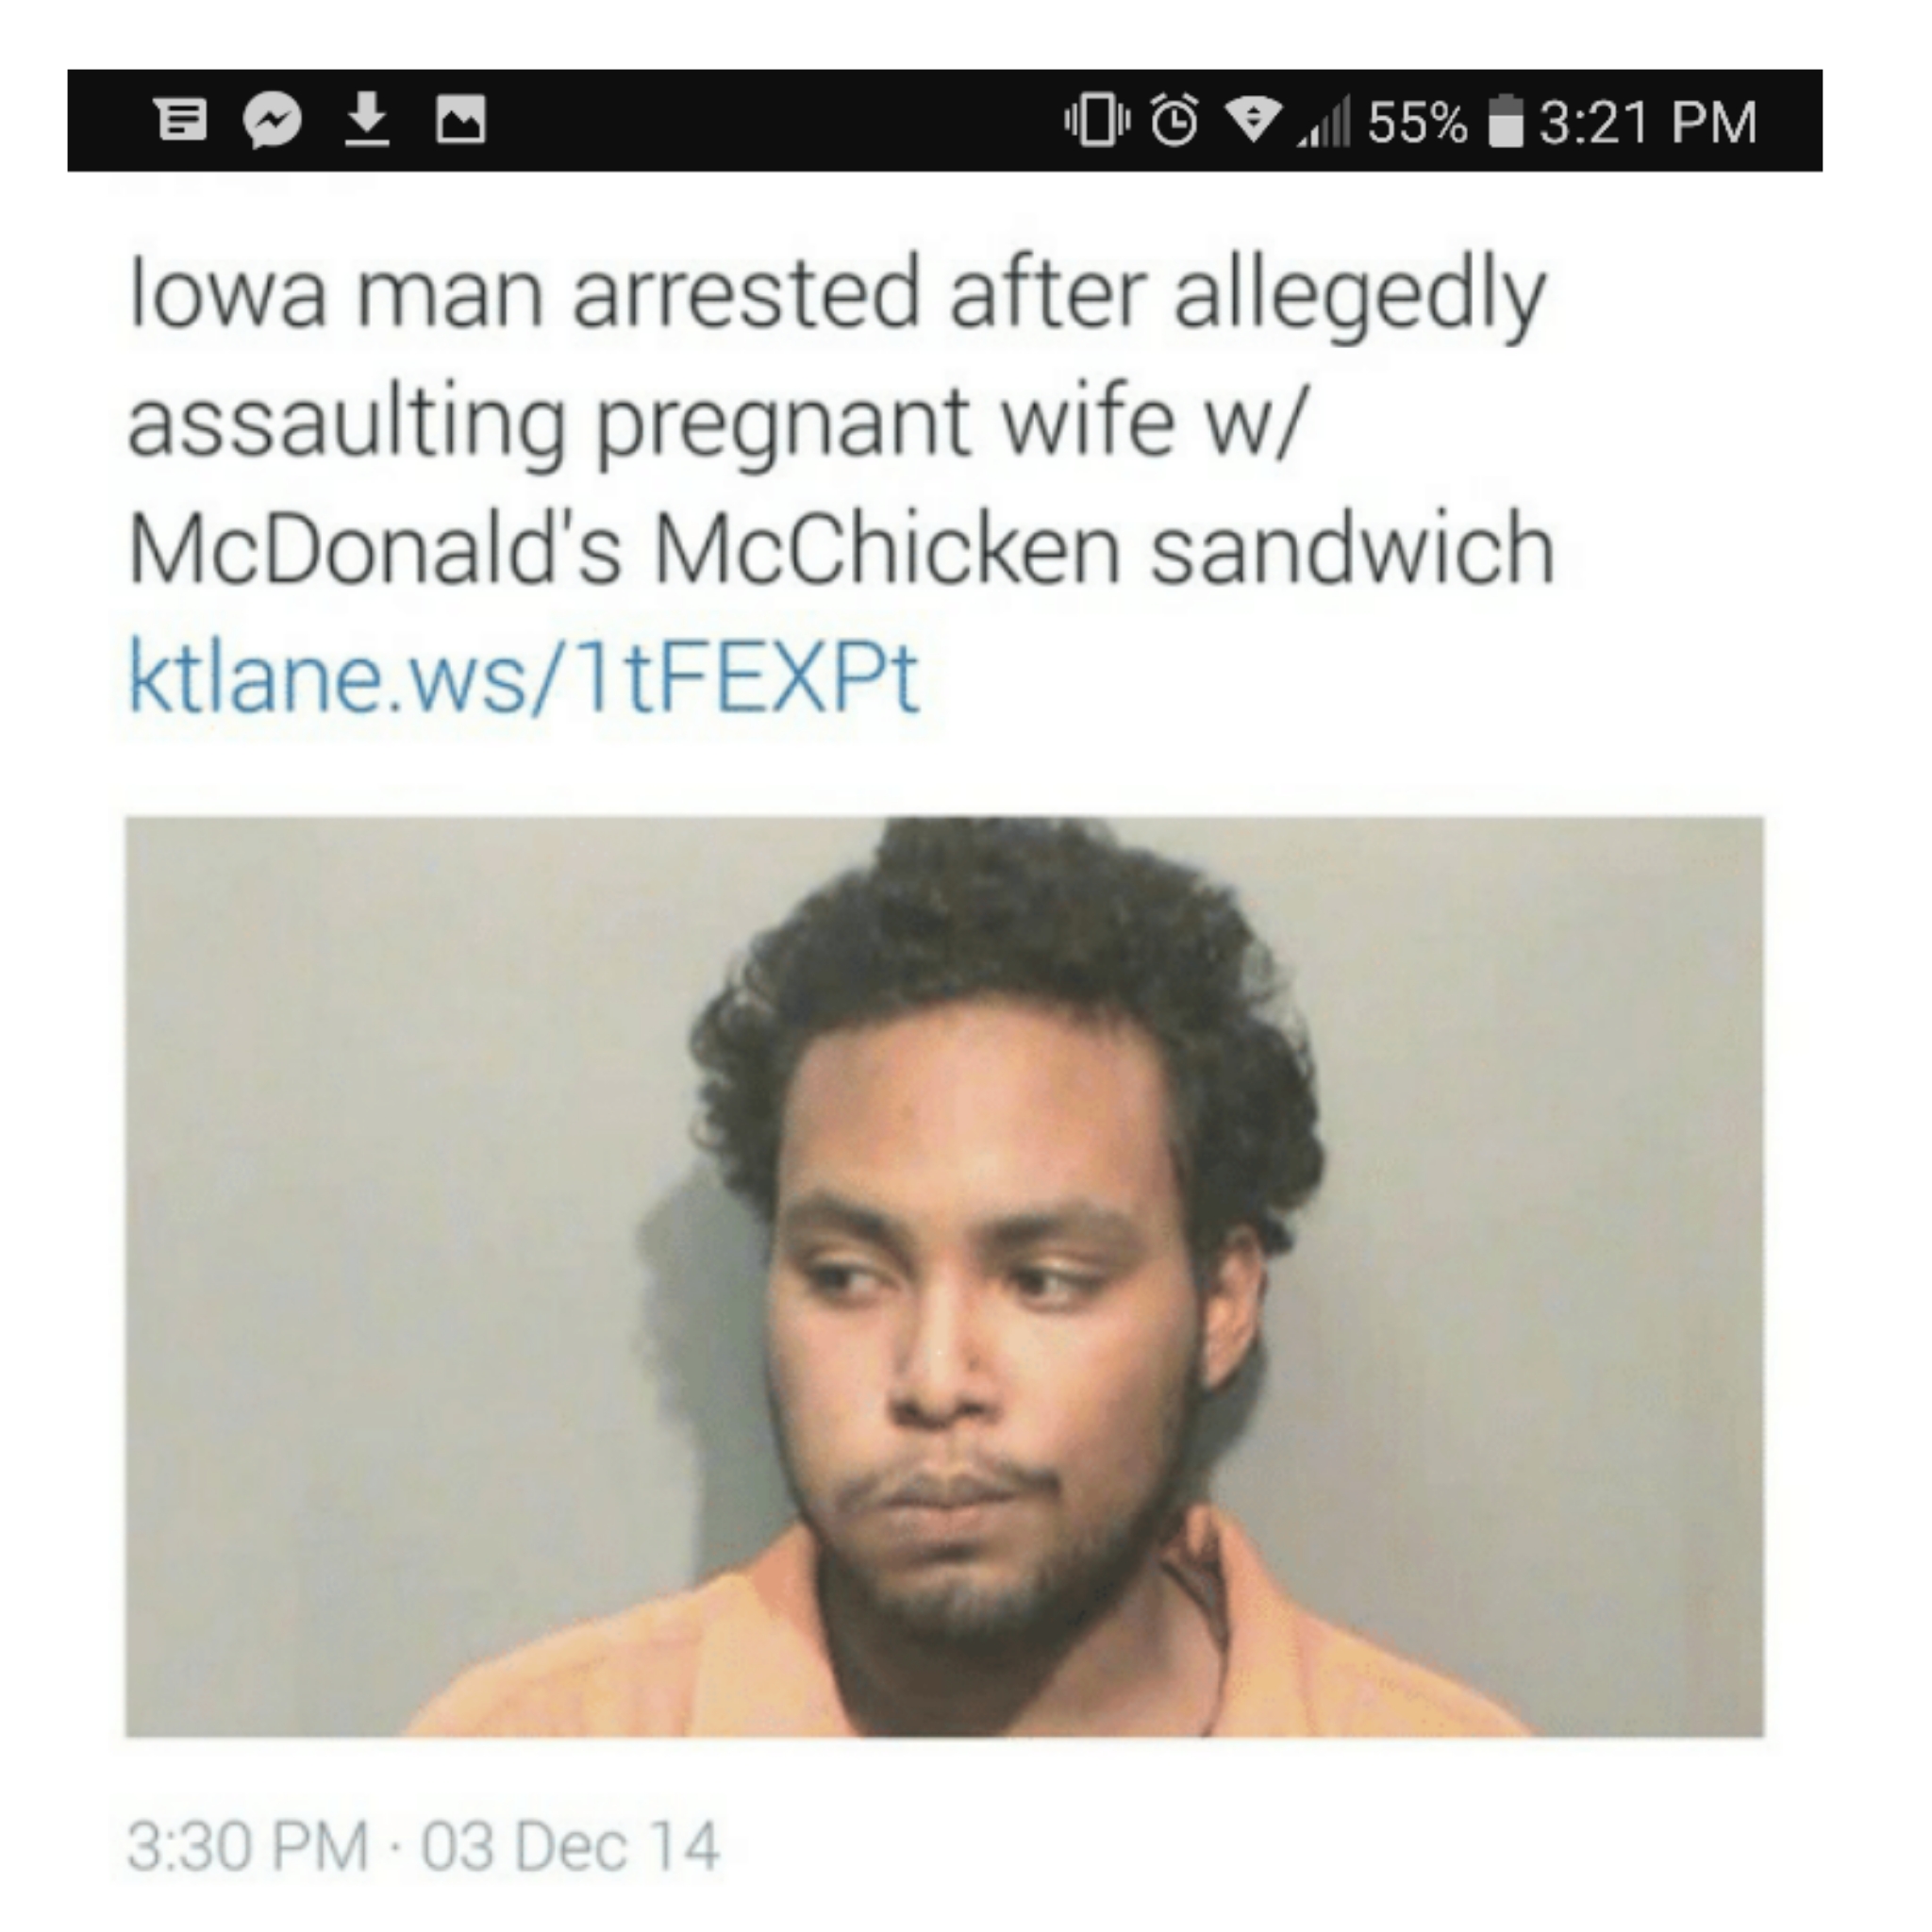 man mcchicken - 0 55% lowa man arrested after allegedly assaulting pregnant wife w McDonald's McChicken sandwich ktlane.ws1tFEXPt 03 Dec 14